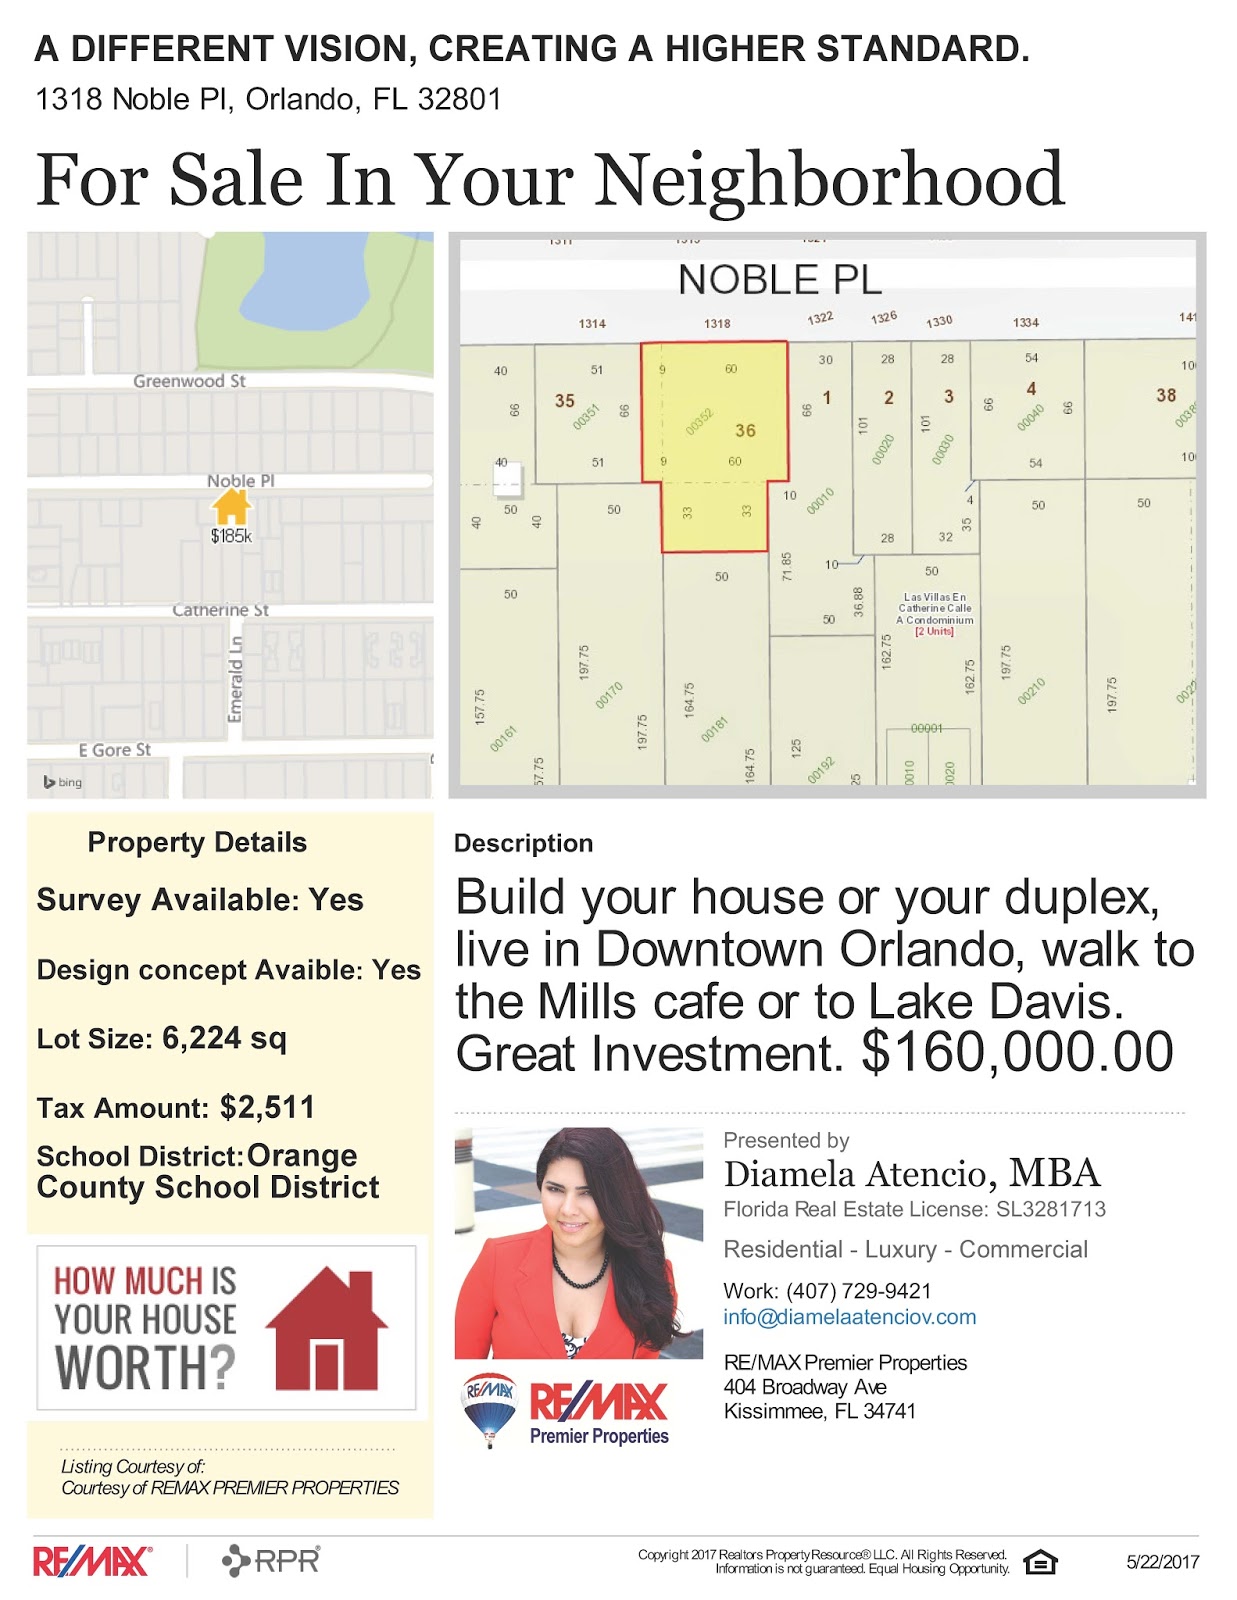 Diamela Atencio V: For Sale Land in Downtown Orlando